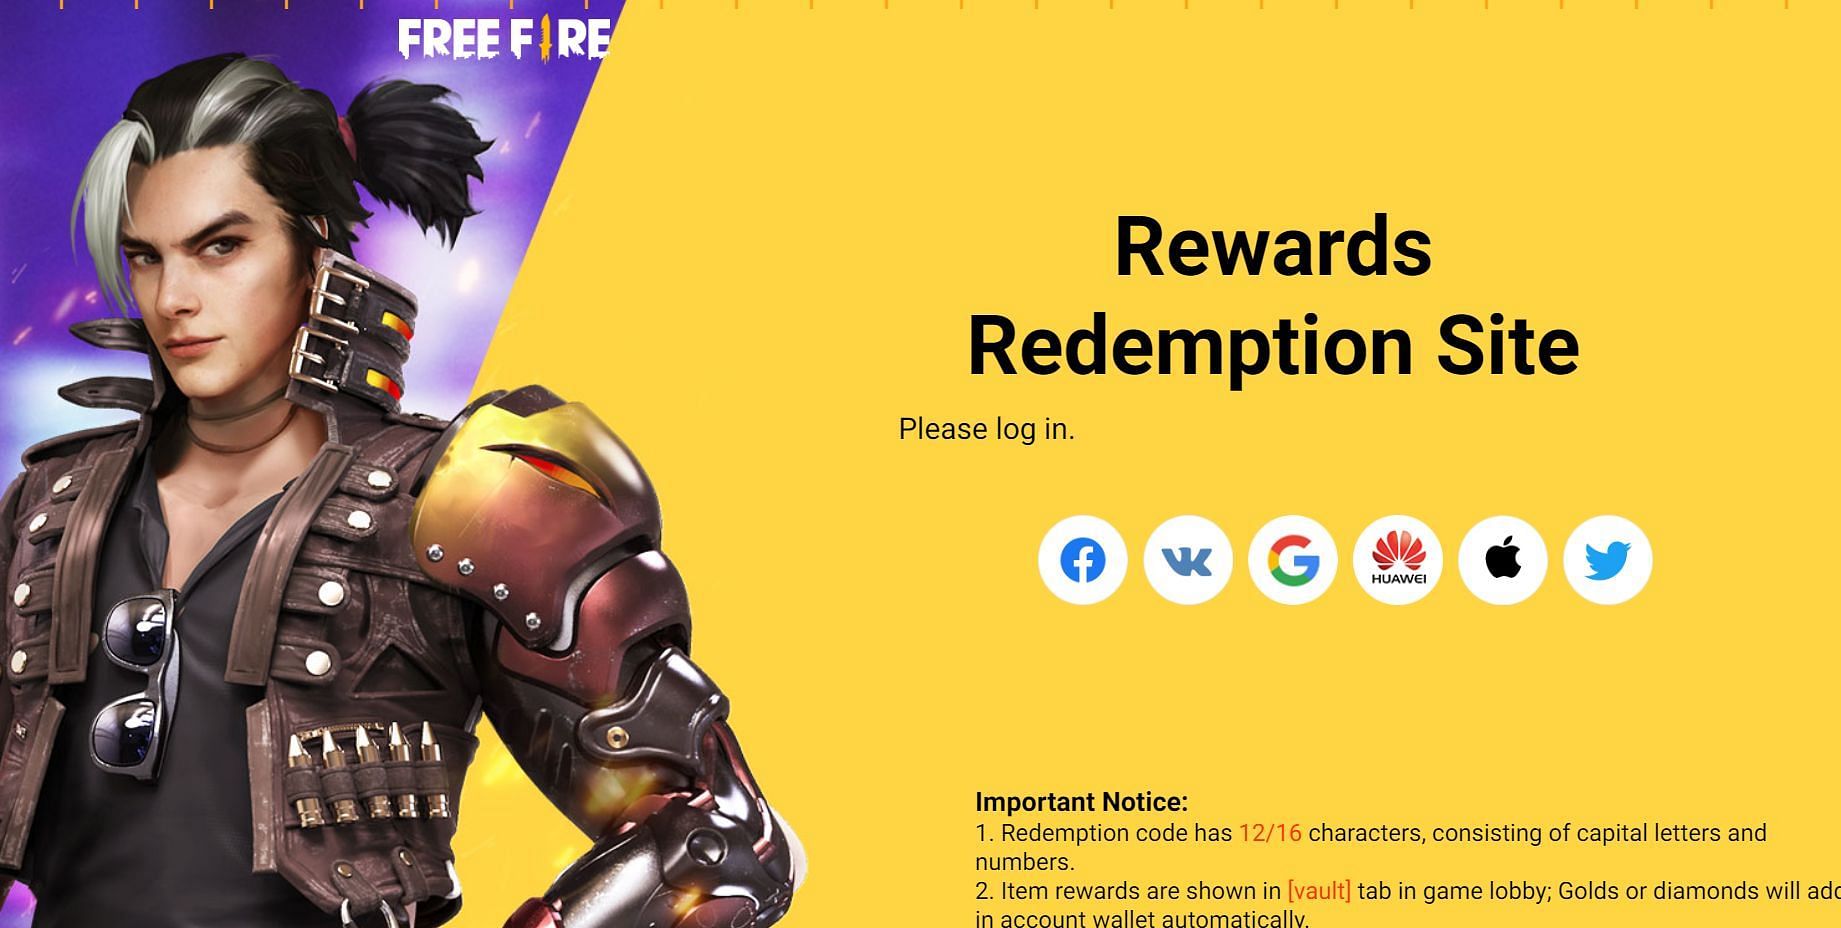 After visiting Rewards Redemption Site, gamers can sign in using the desired platform (Image via Garena)